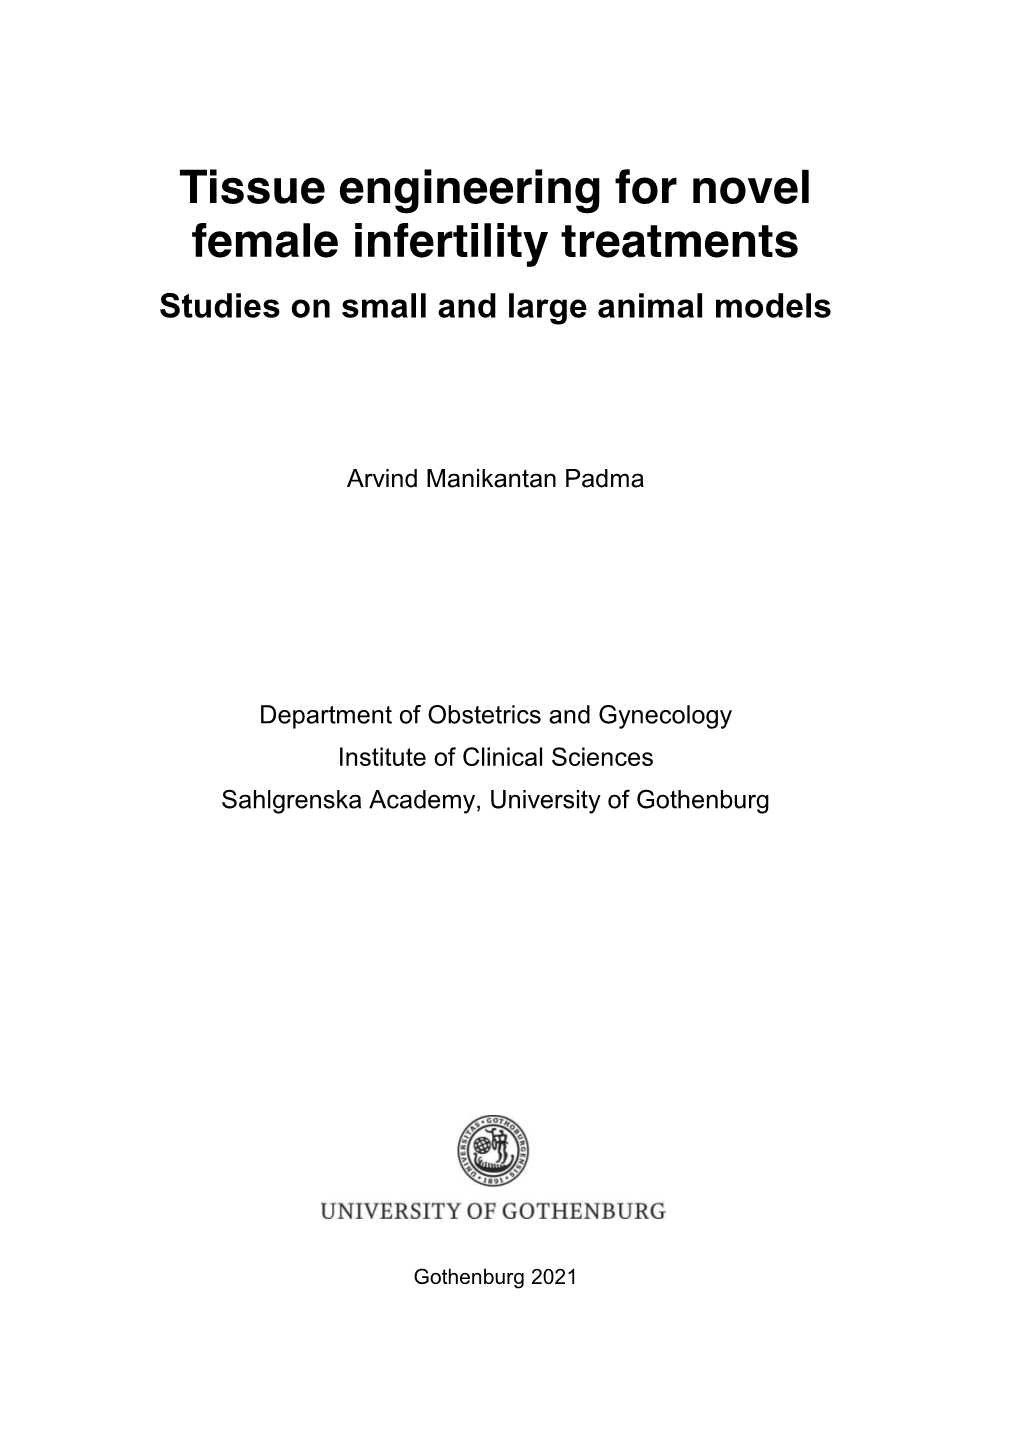 Tissue Engineering for Novel Female Infertility Treatments